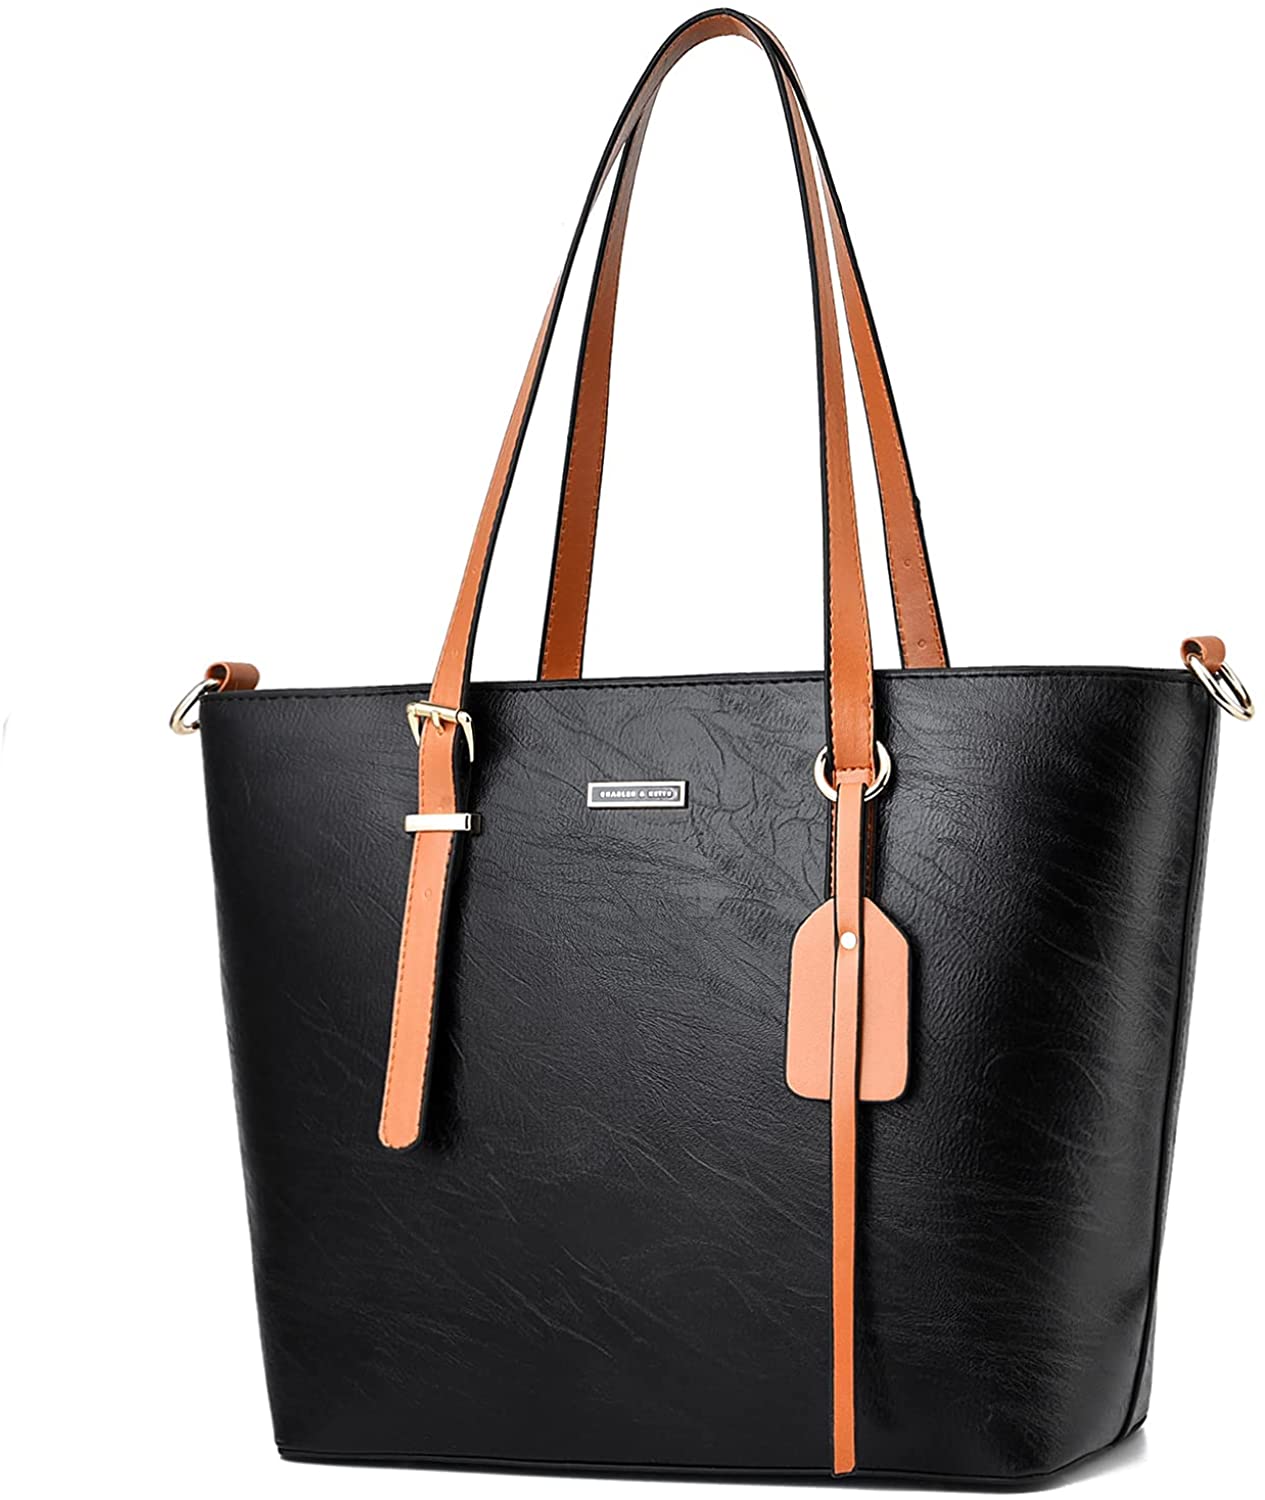 Details about   ALARION Women Top Handle Satchel Handbags Shoulder Bag Messenger Tote Bag Purse 